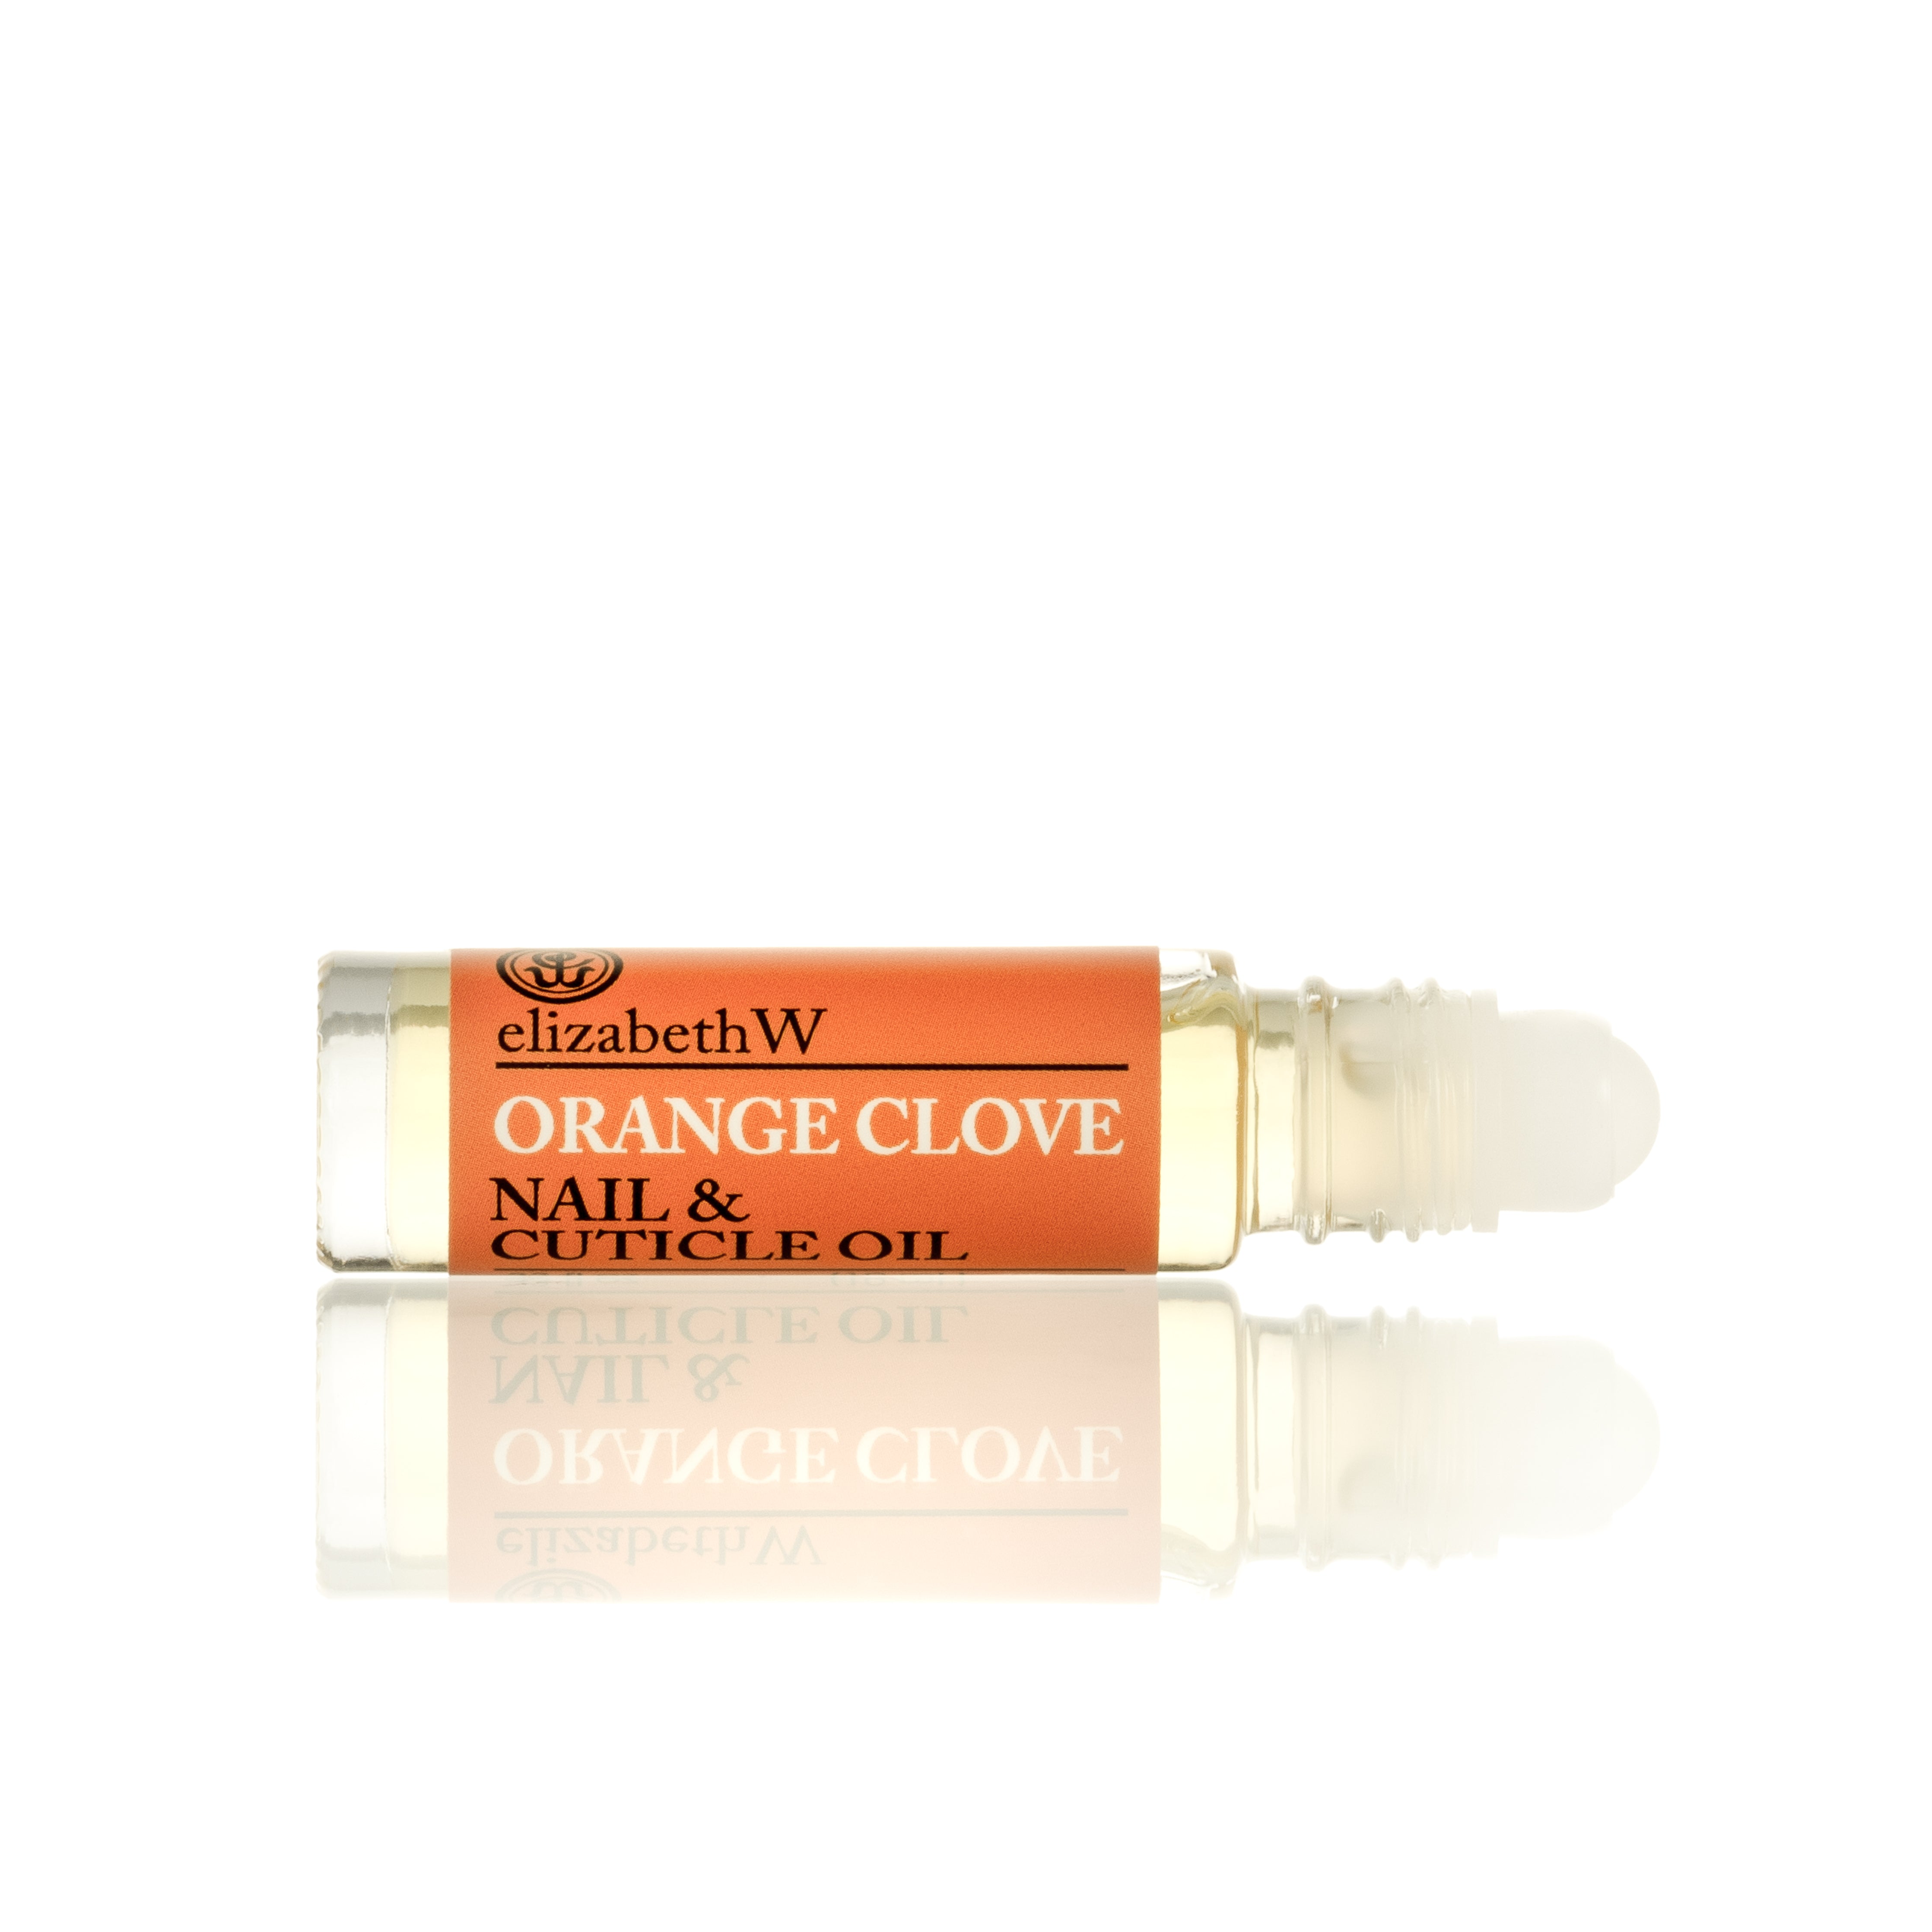 Orange Clove Nail & Cuticle Oil